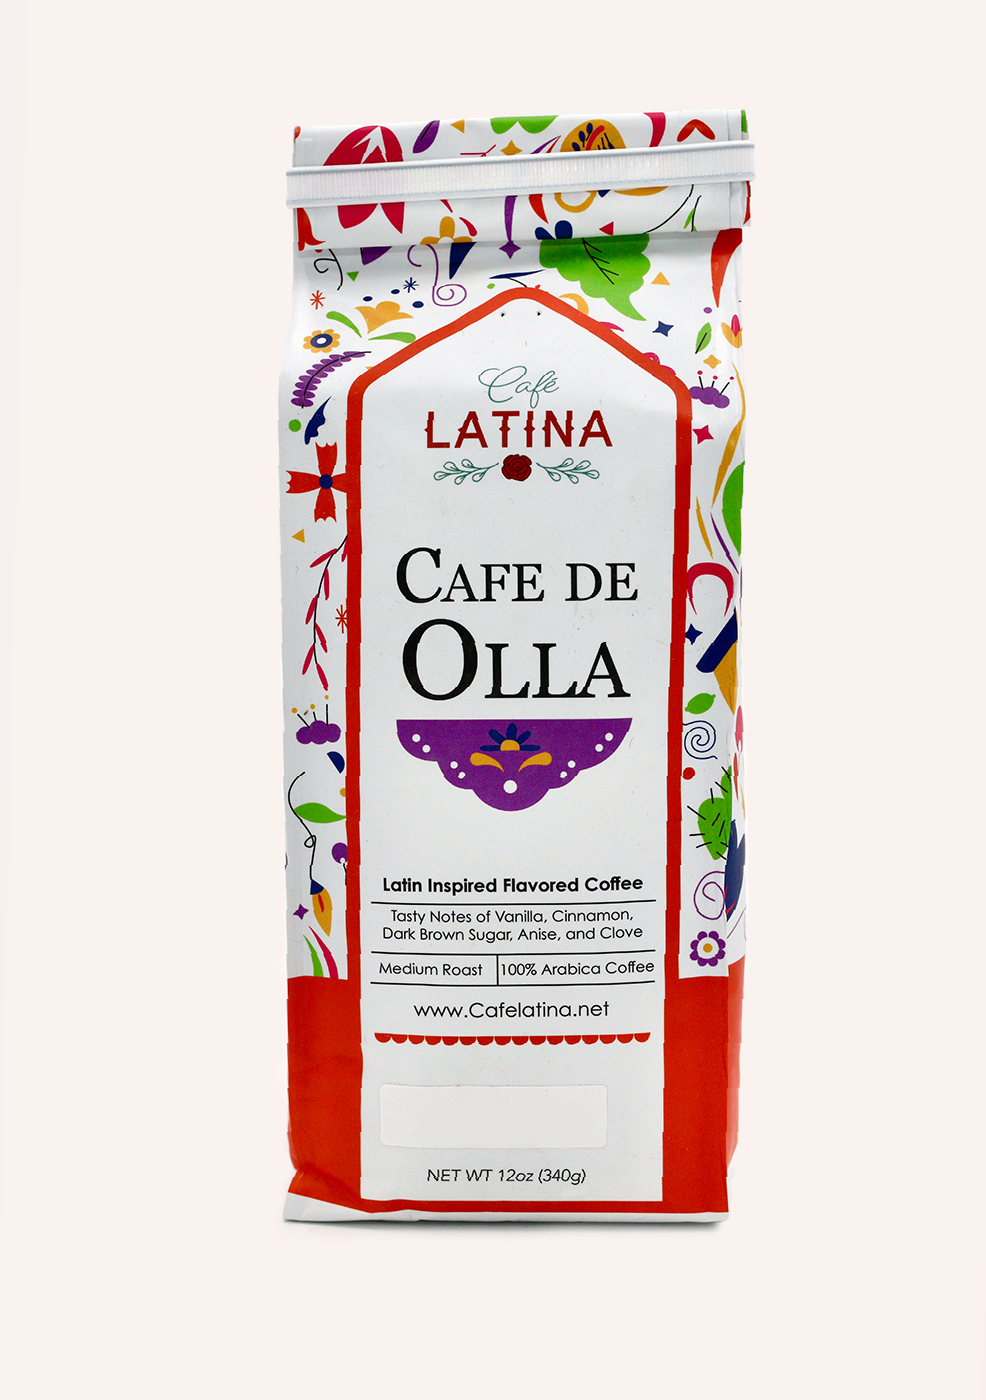 Cafe de olla by Cafe Aroma LA in Pomona, CA - Alignable